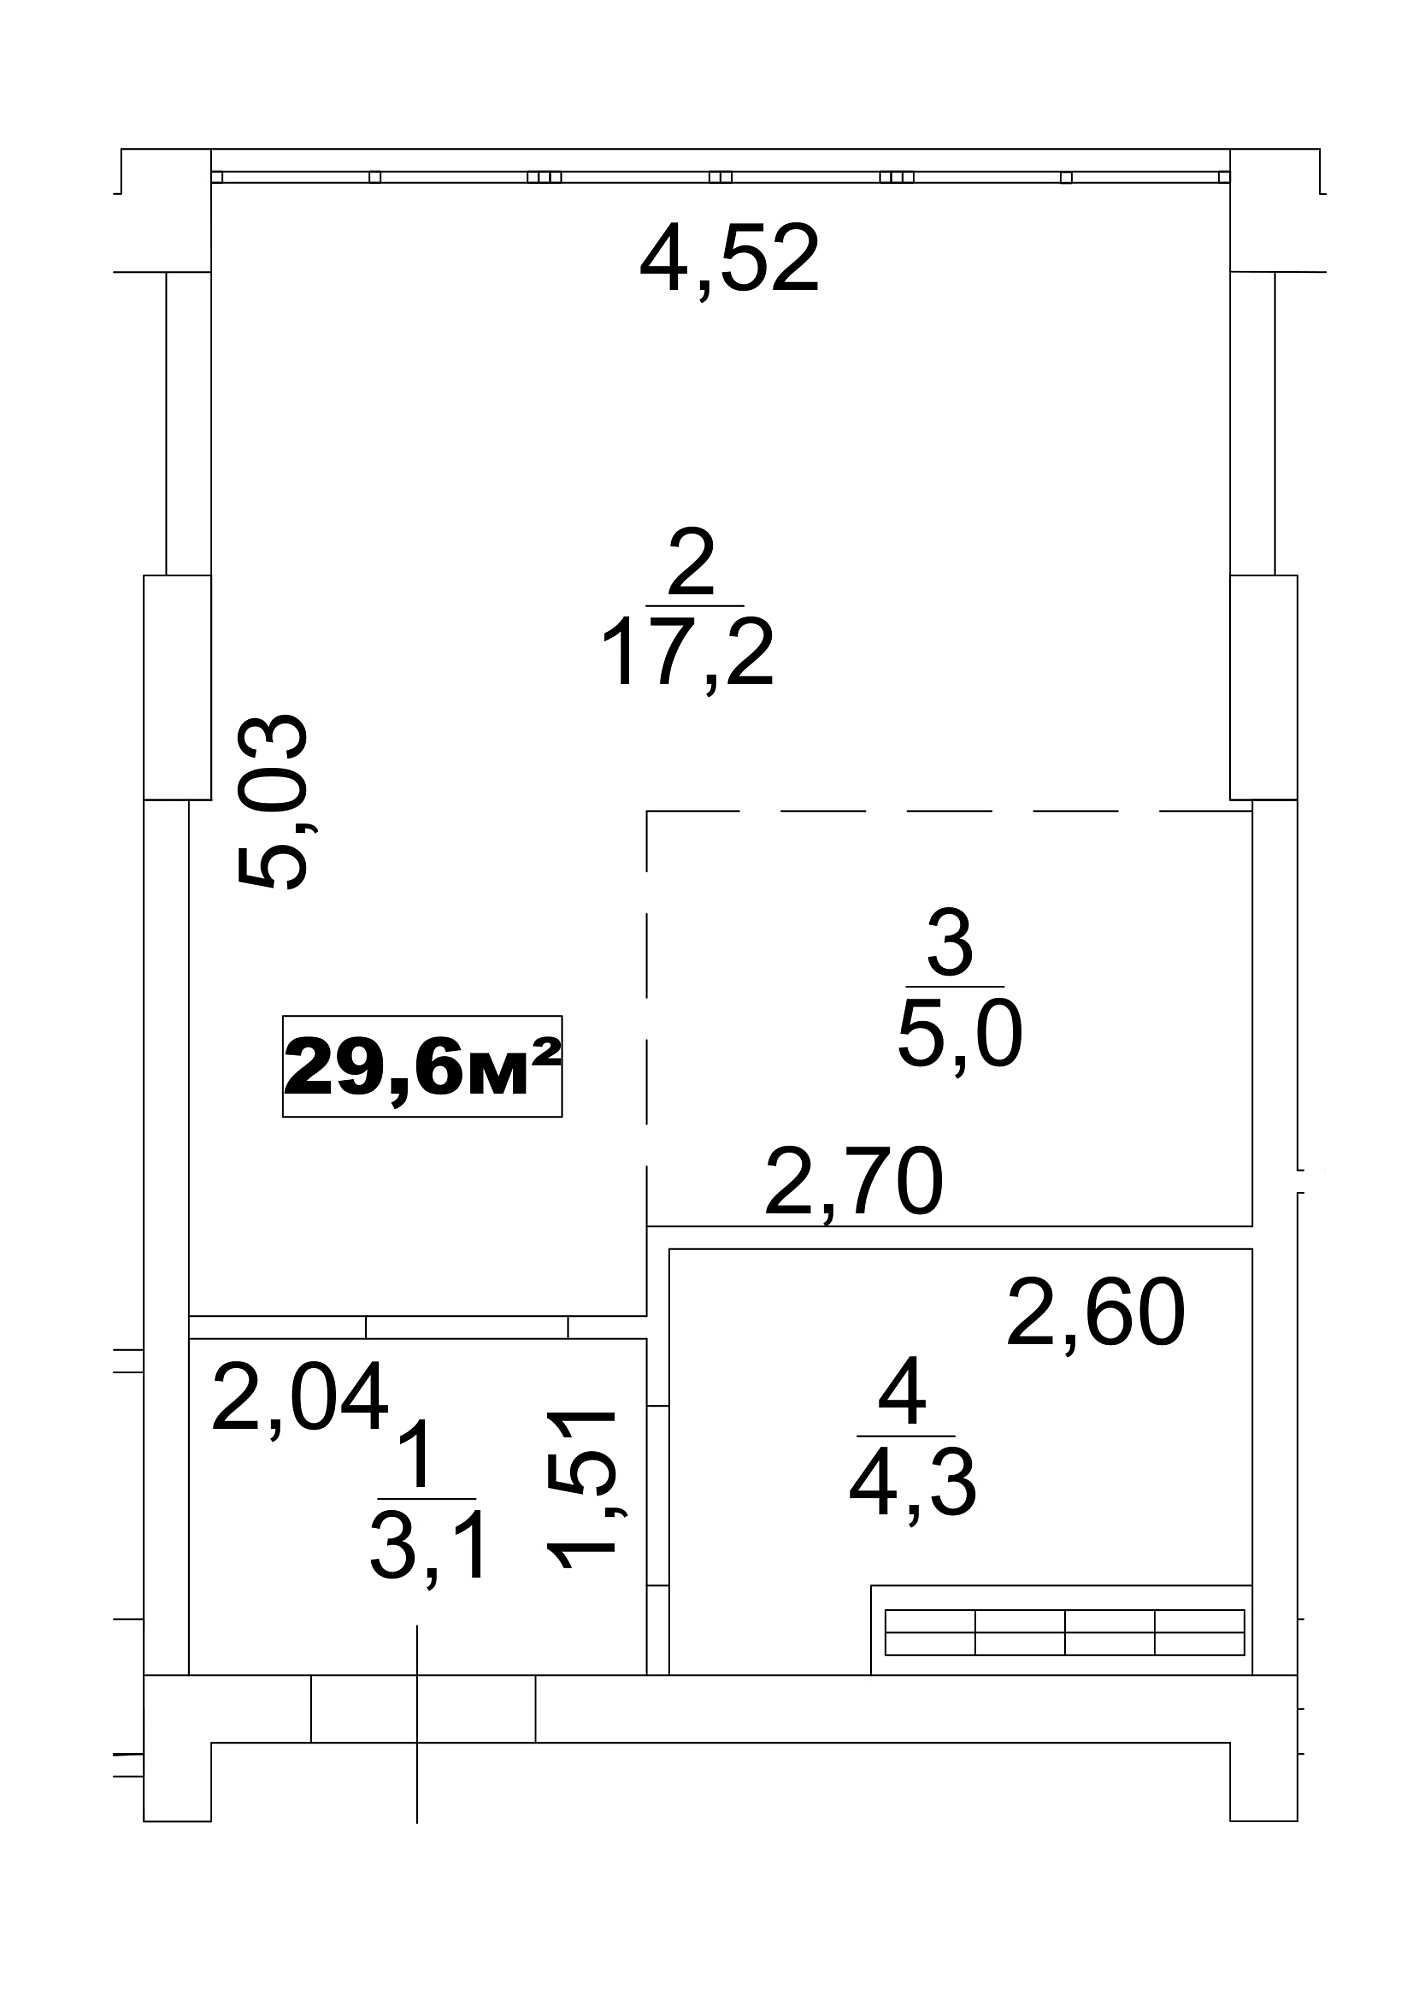 Planning Smart flats area 29.6m2, AB-13-05/00038.